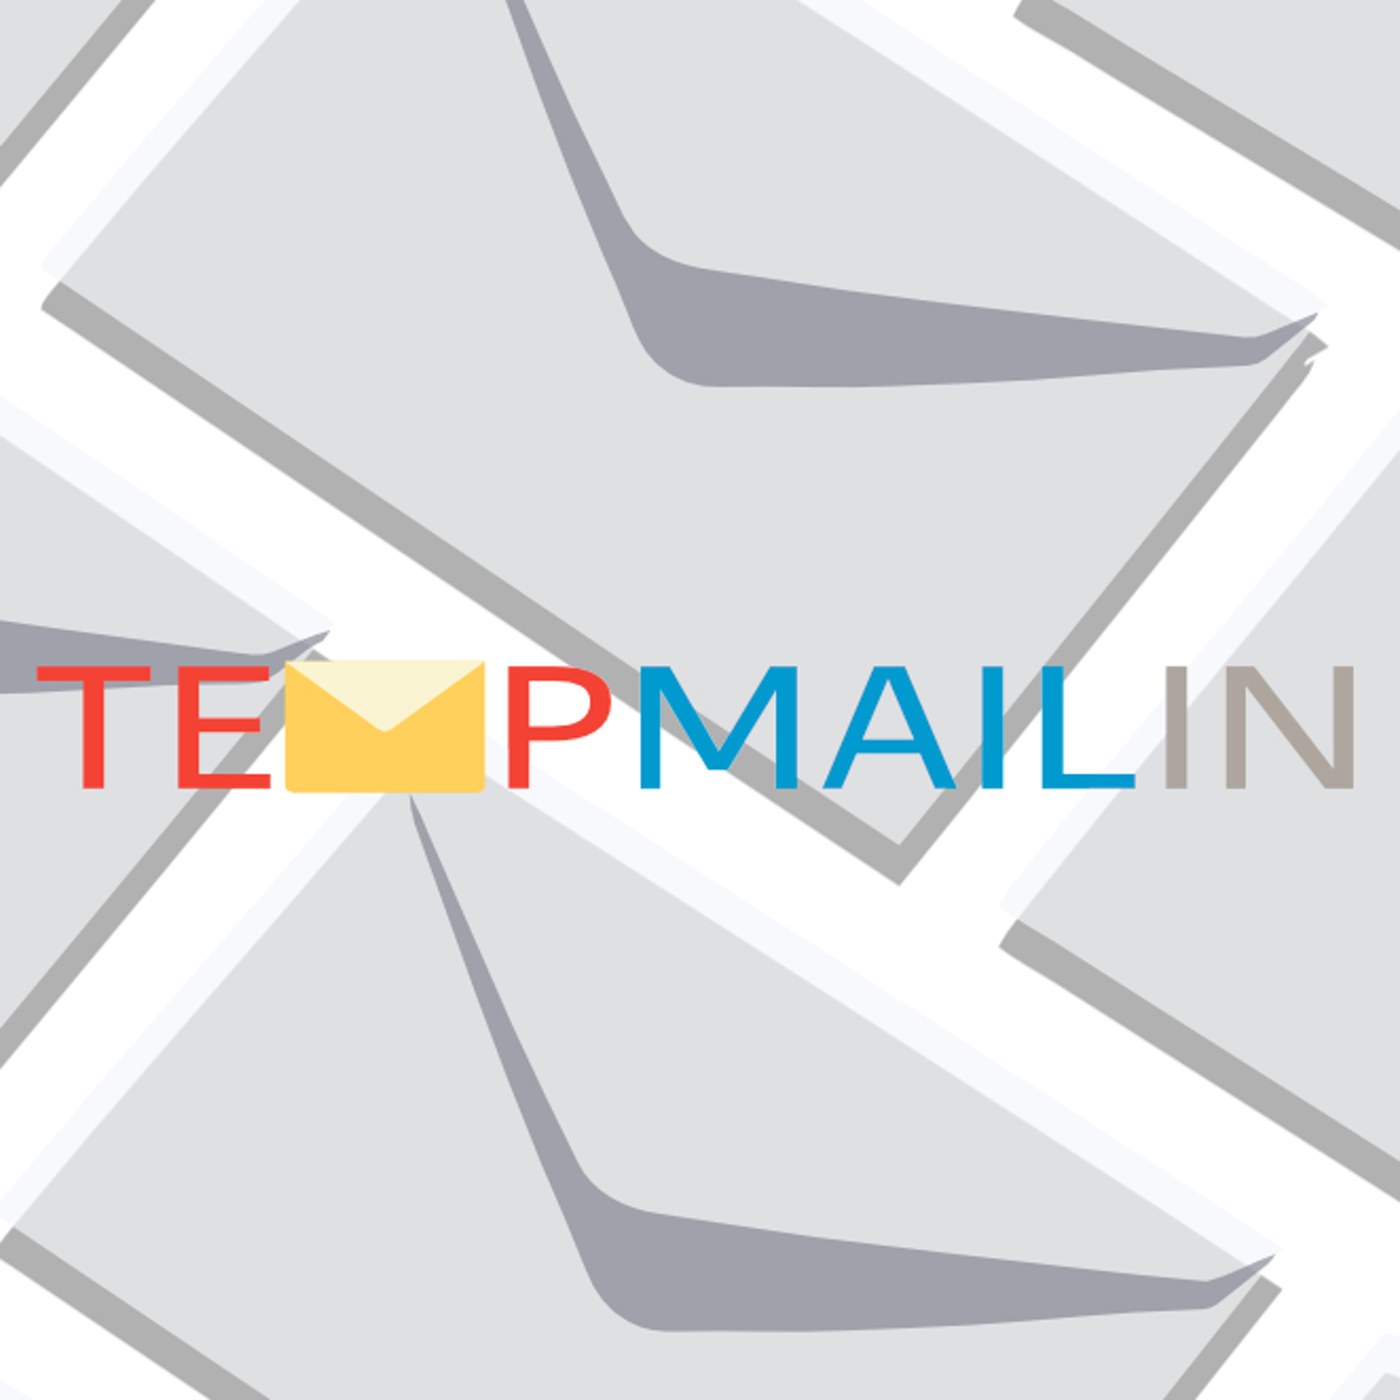 Tempmailin - temp mail address